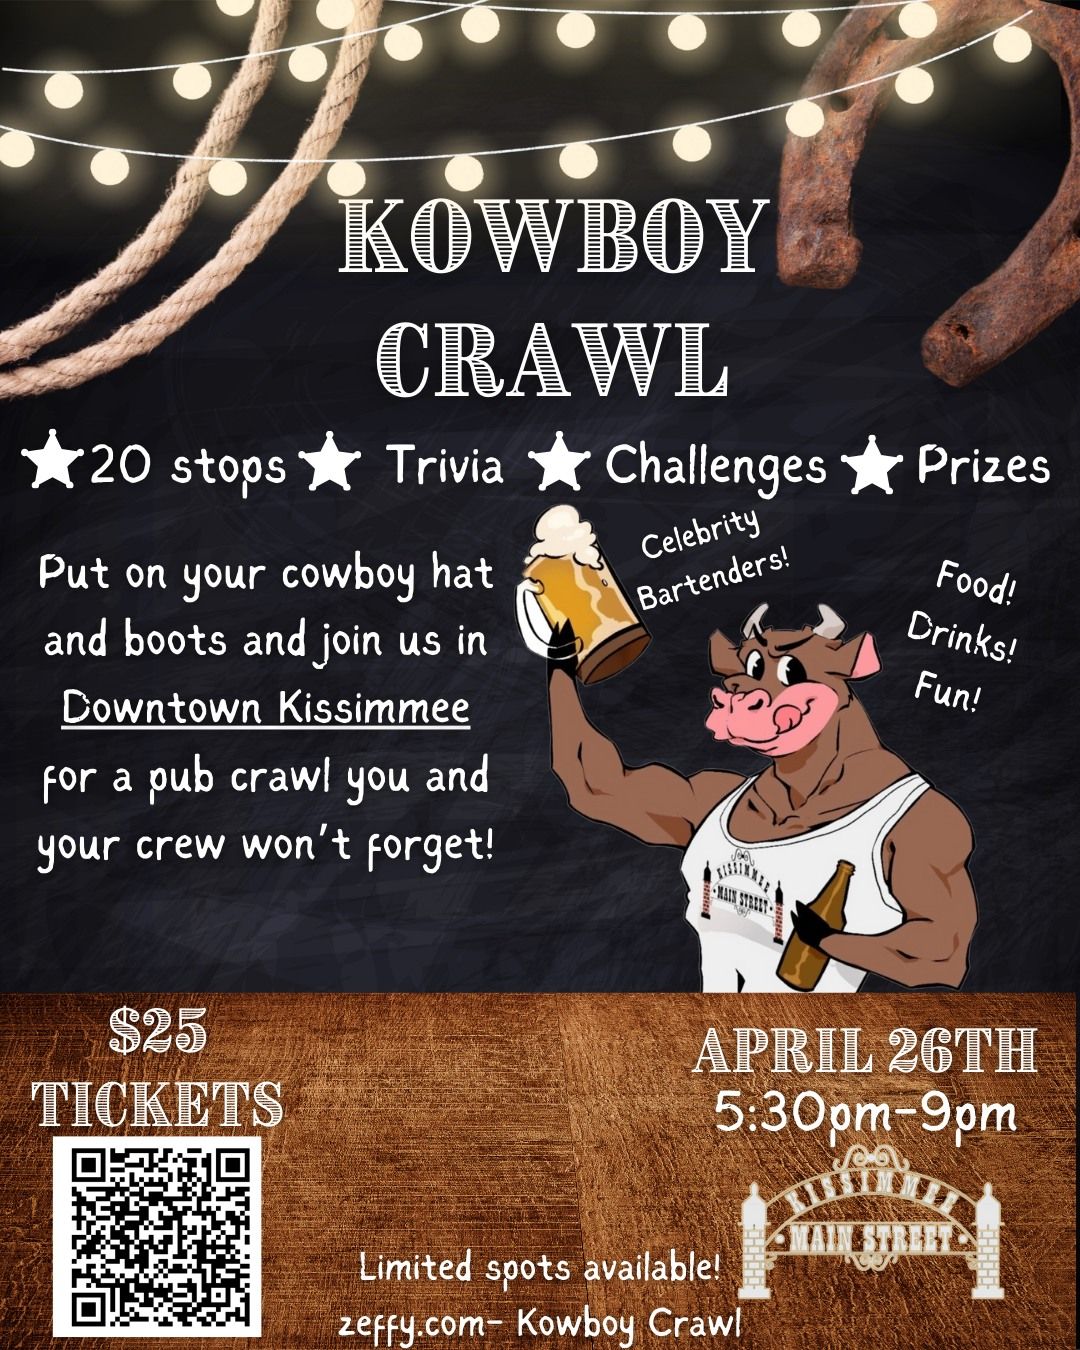 Kowboy Crawl- Kissimmee Main Street Pub Crawl, Y'all!